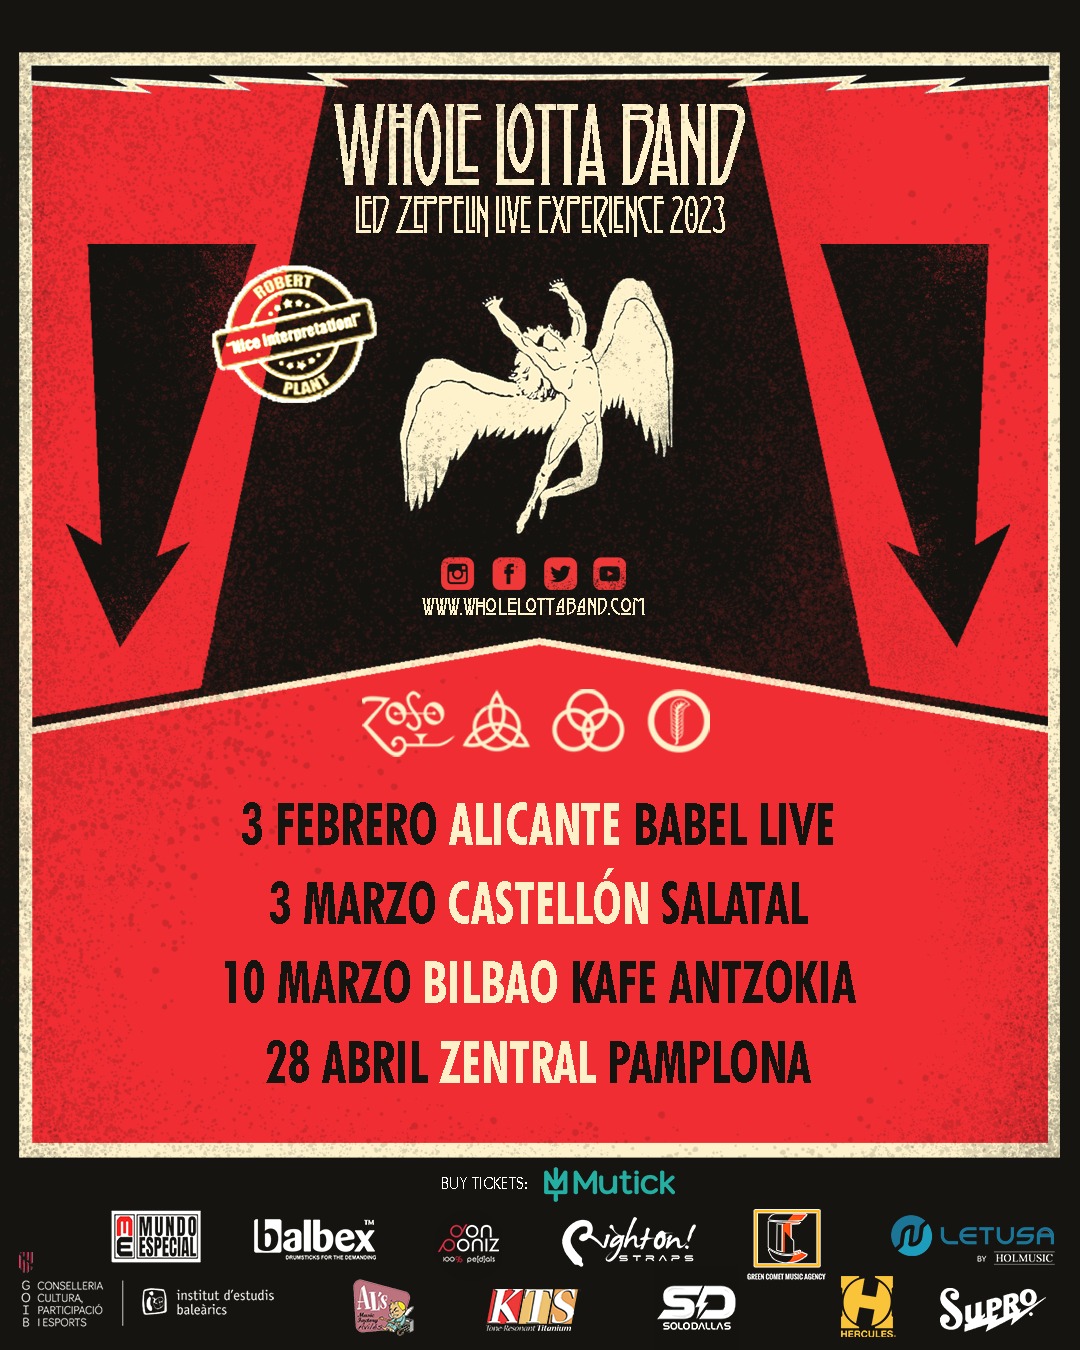 Whole Lotta Band - Led Zeppelin Live Experience en Bilbao - Mutick